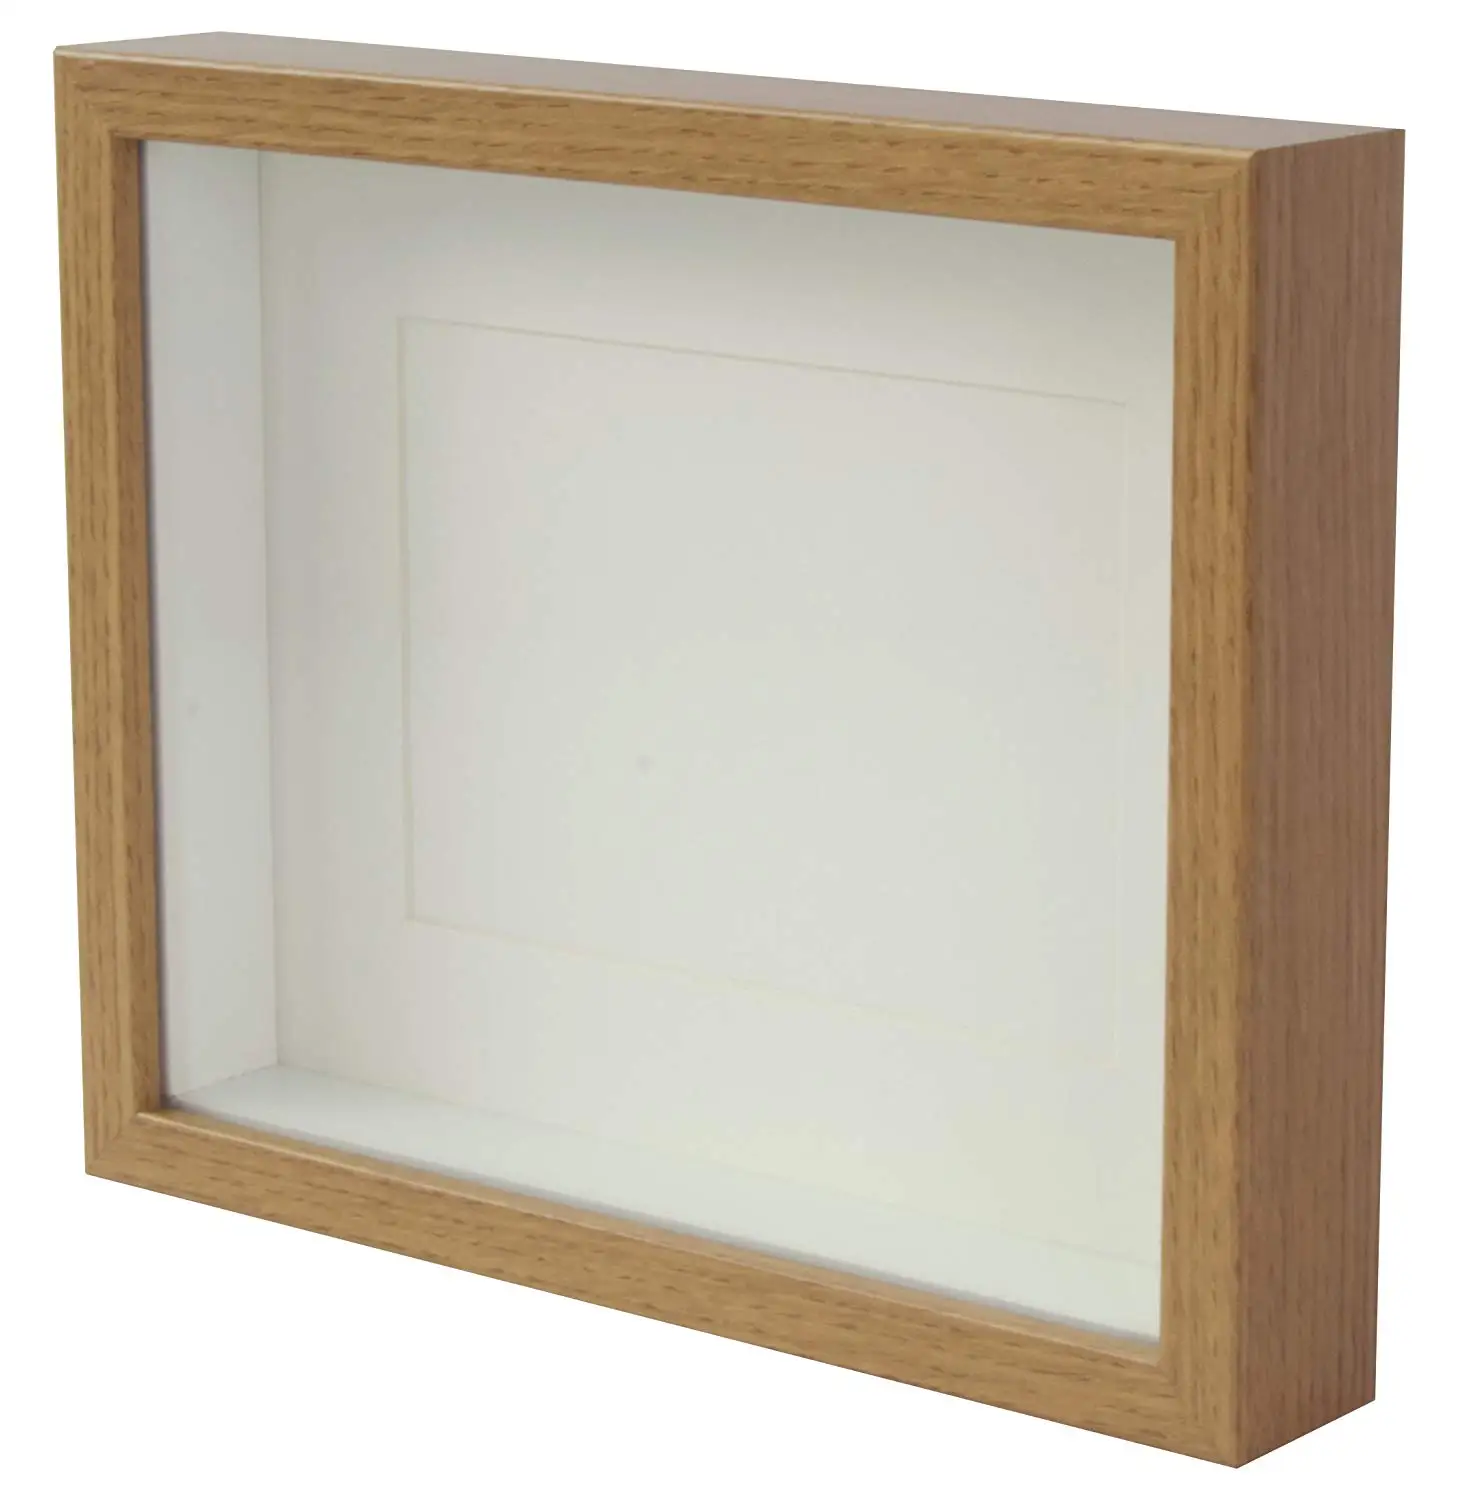 Oak Wood Shadow Box Photo Frame - Buy Photo Frame,Shadow Box Product on ...